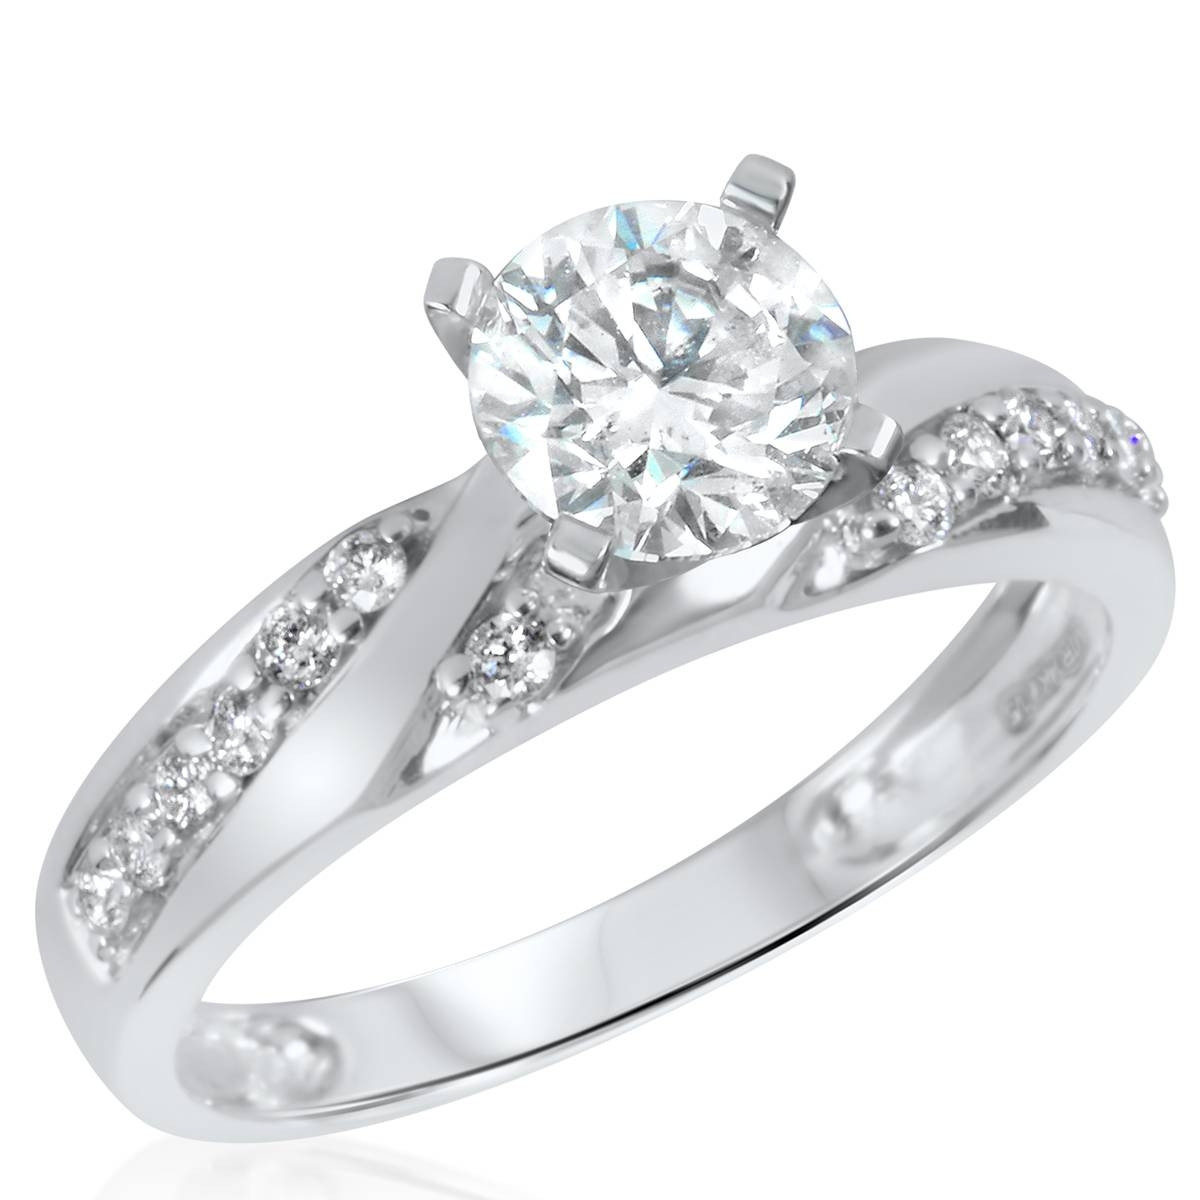 Affordable Wedding Rings Sets
 2019 Popular Cheap Diamond Wedding Bands